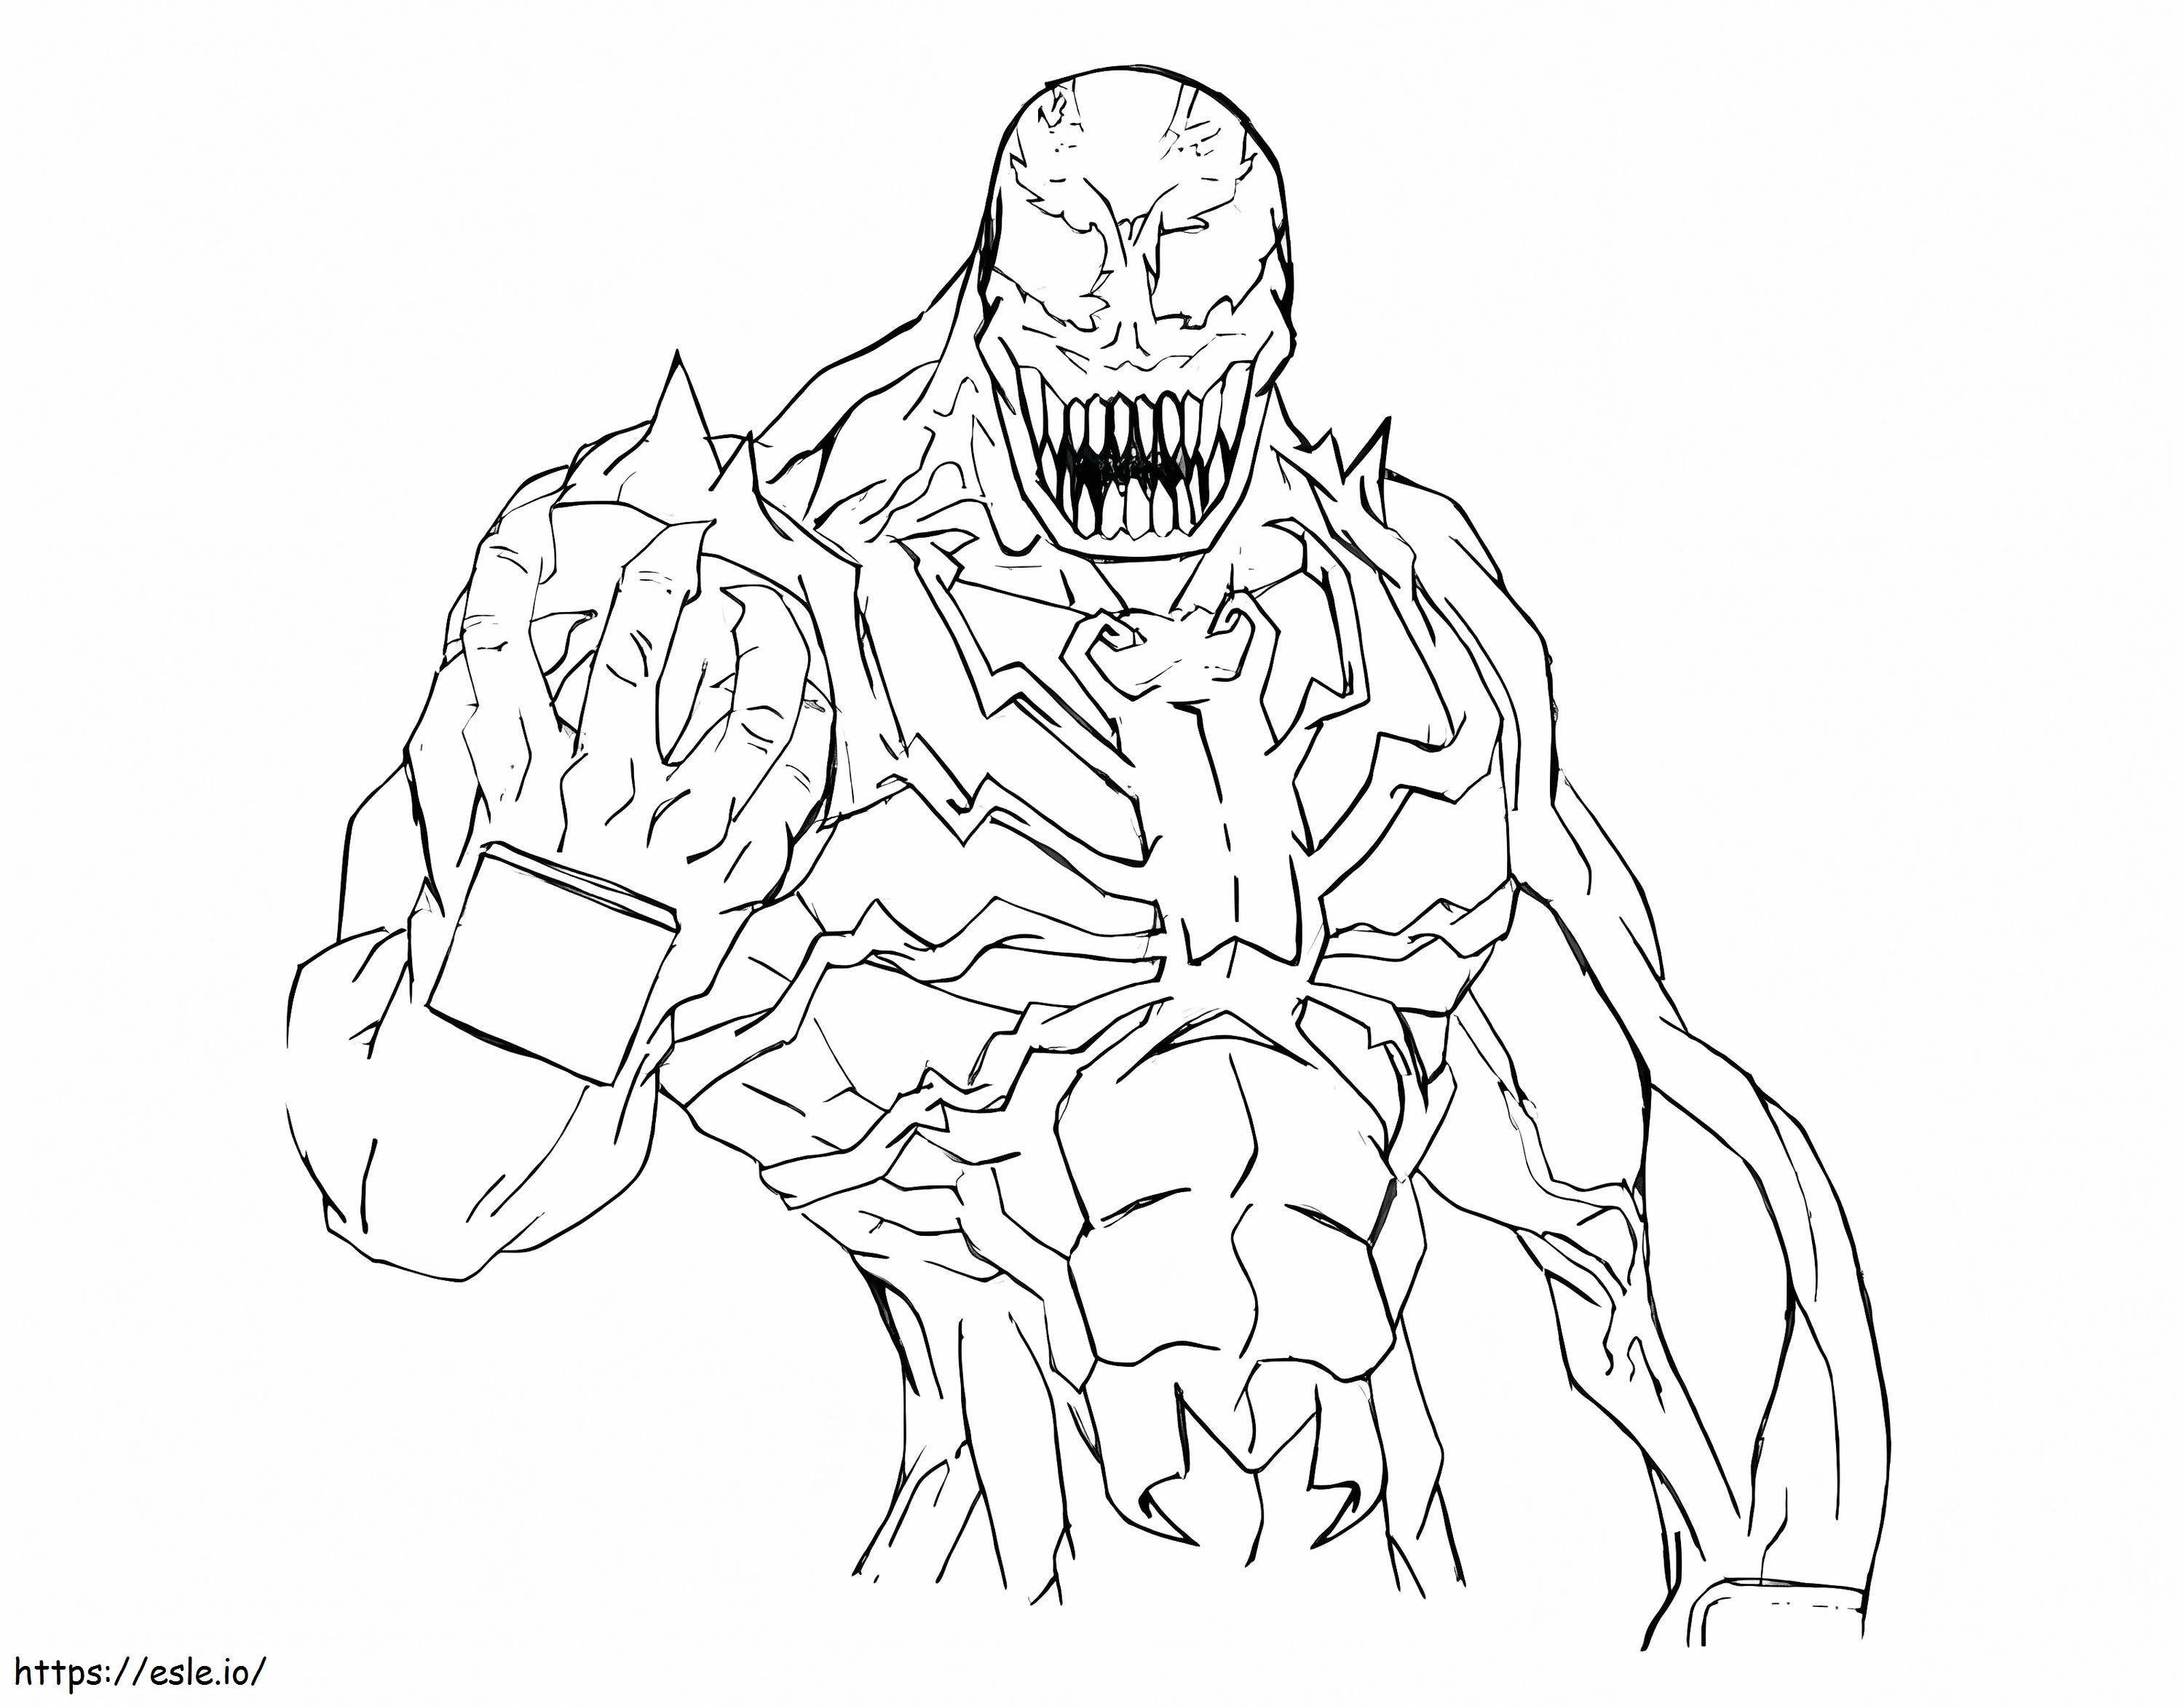 Evil Venom coloring page